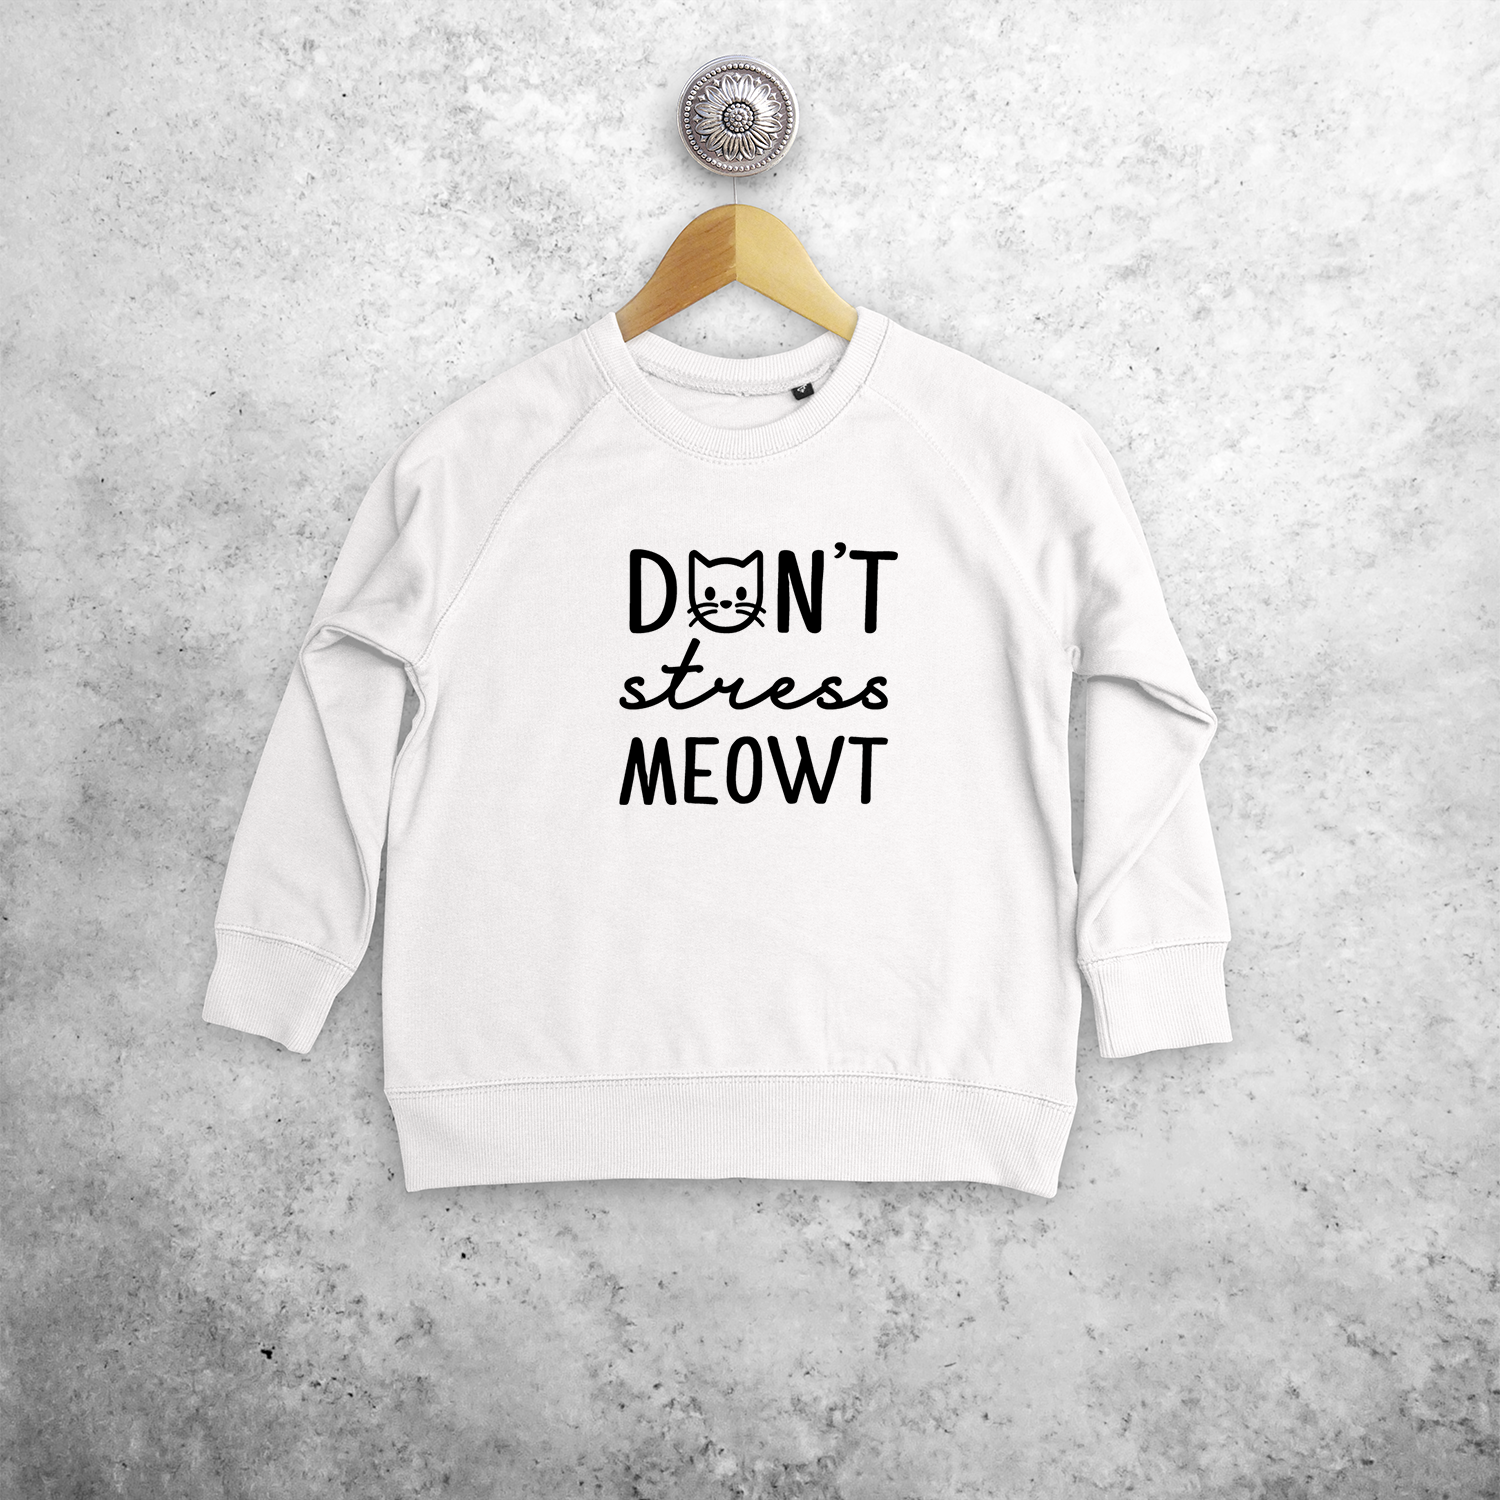 'Don't stress meowt' kids sweater